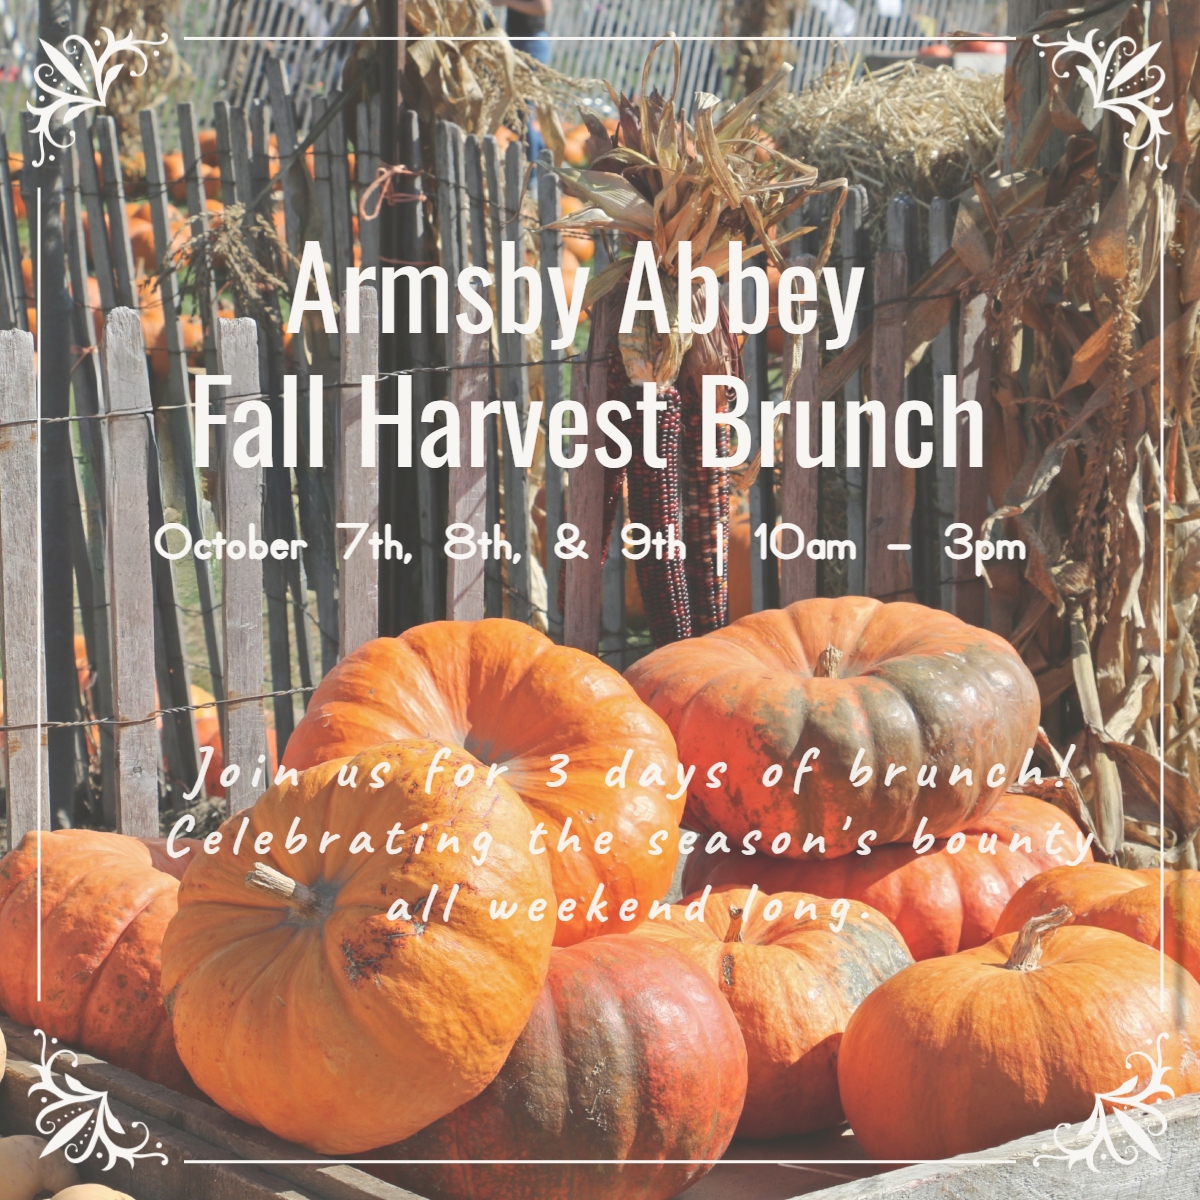 Armsby abbey fall harvest brunch.